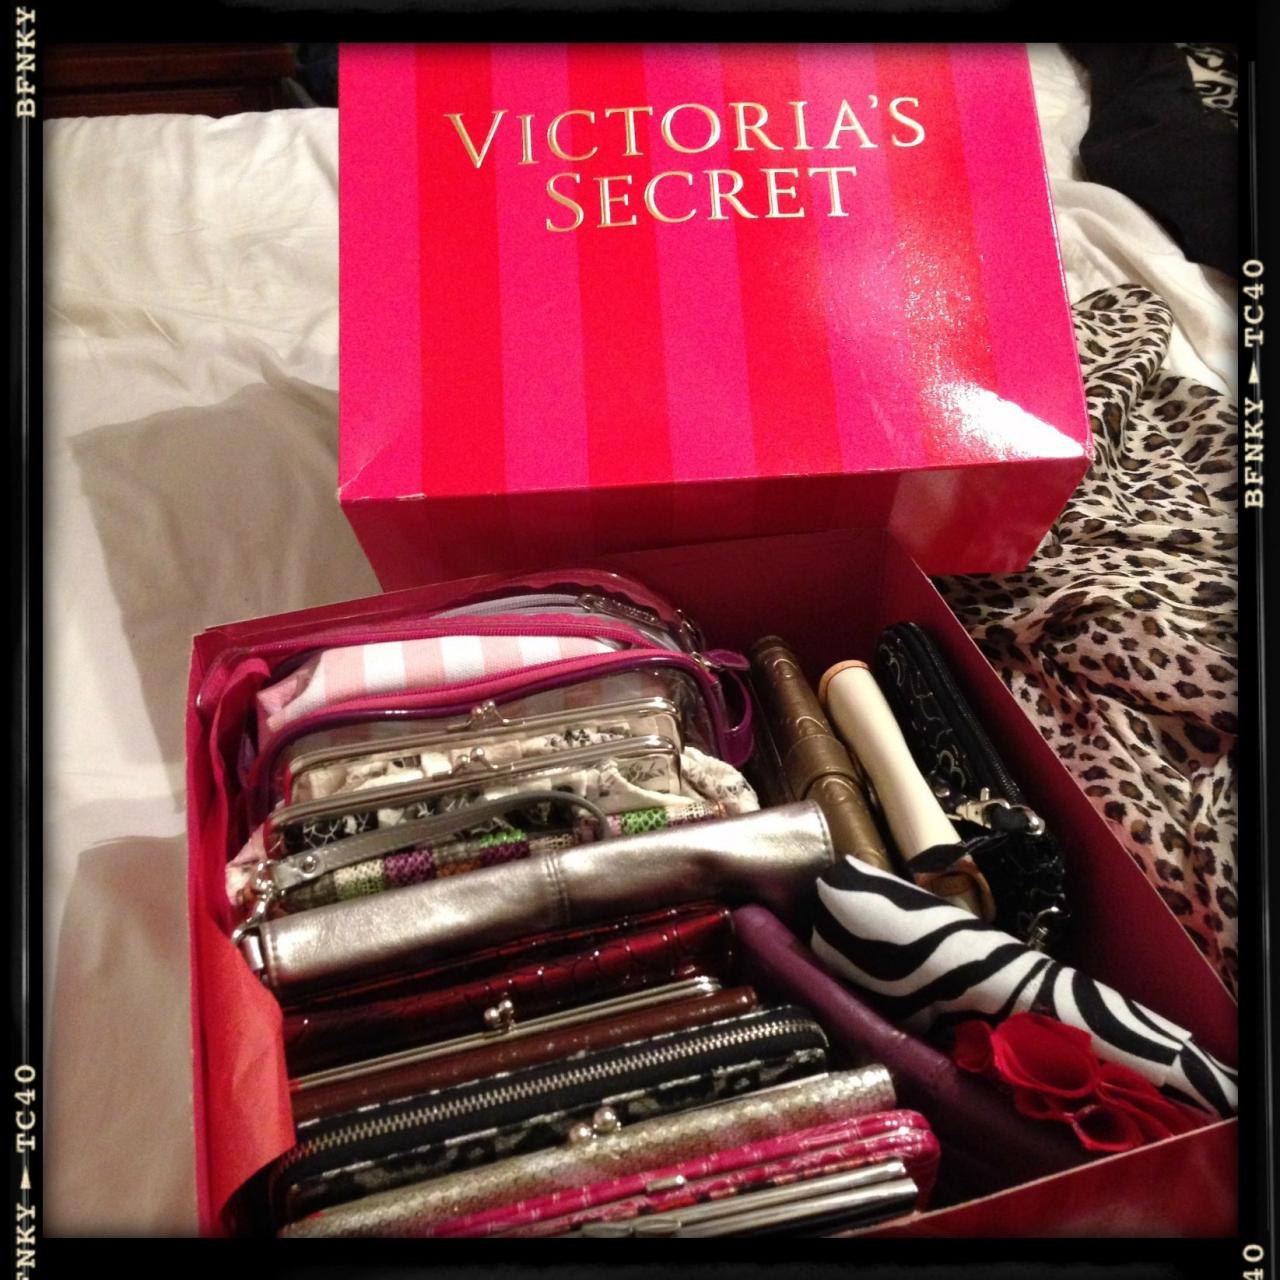 Store wallets, makeup bags, etc... In a big Victoria's Secret gift box